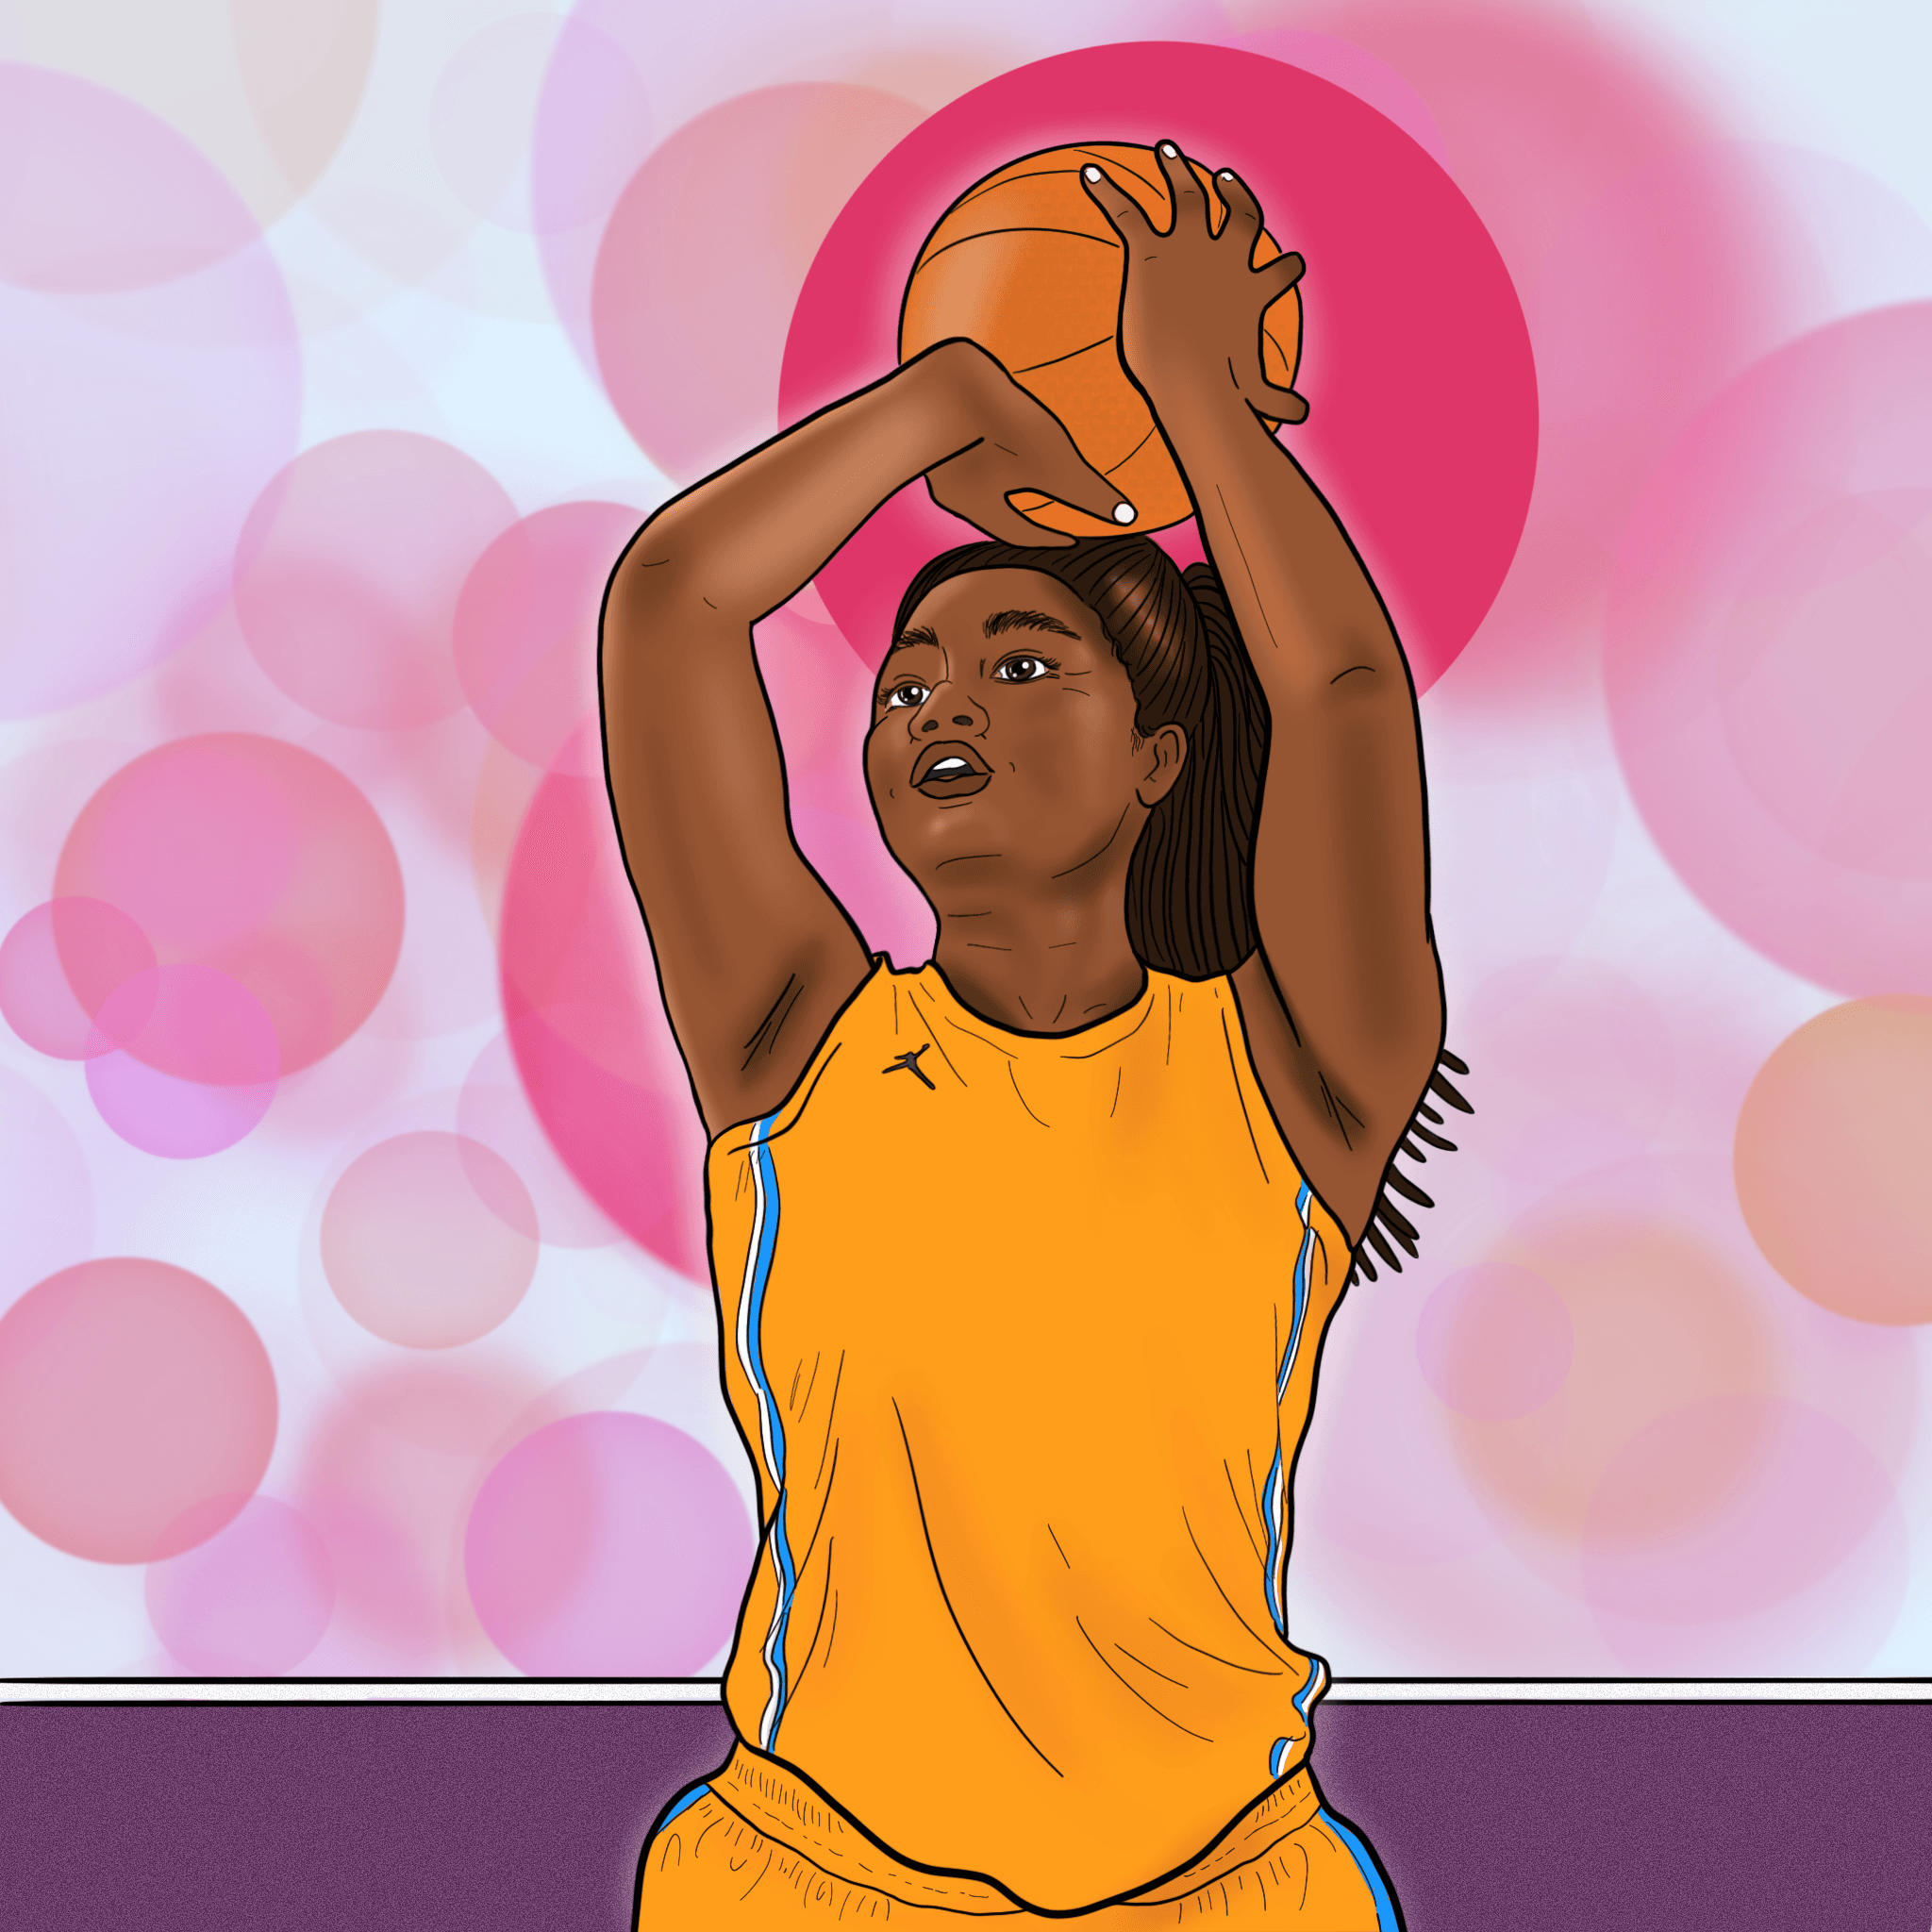 Thumbnail for "Self Love and Basketball ".